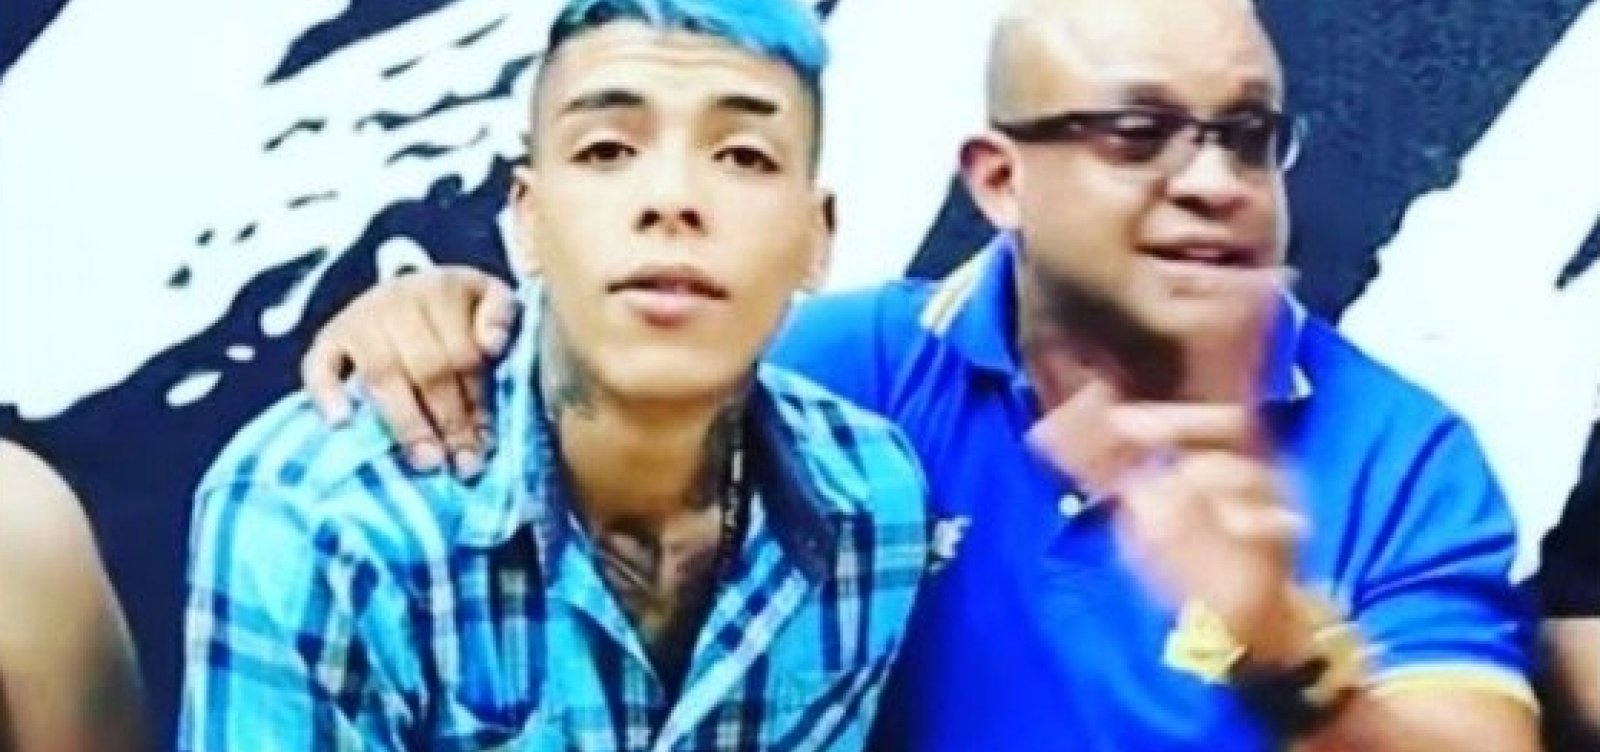 Empresário Juninho Love lamenta morte de MC Kevin: "Funk está de luto"